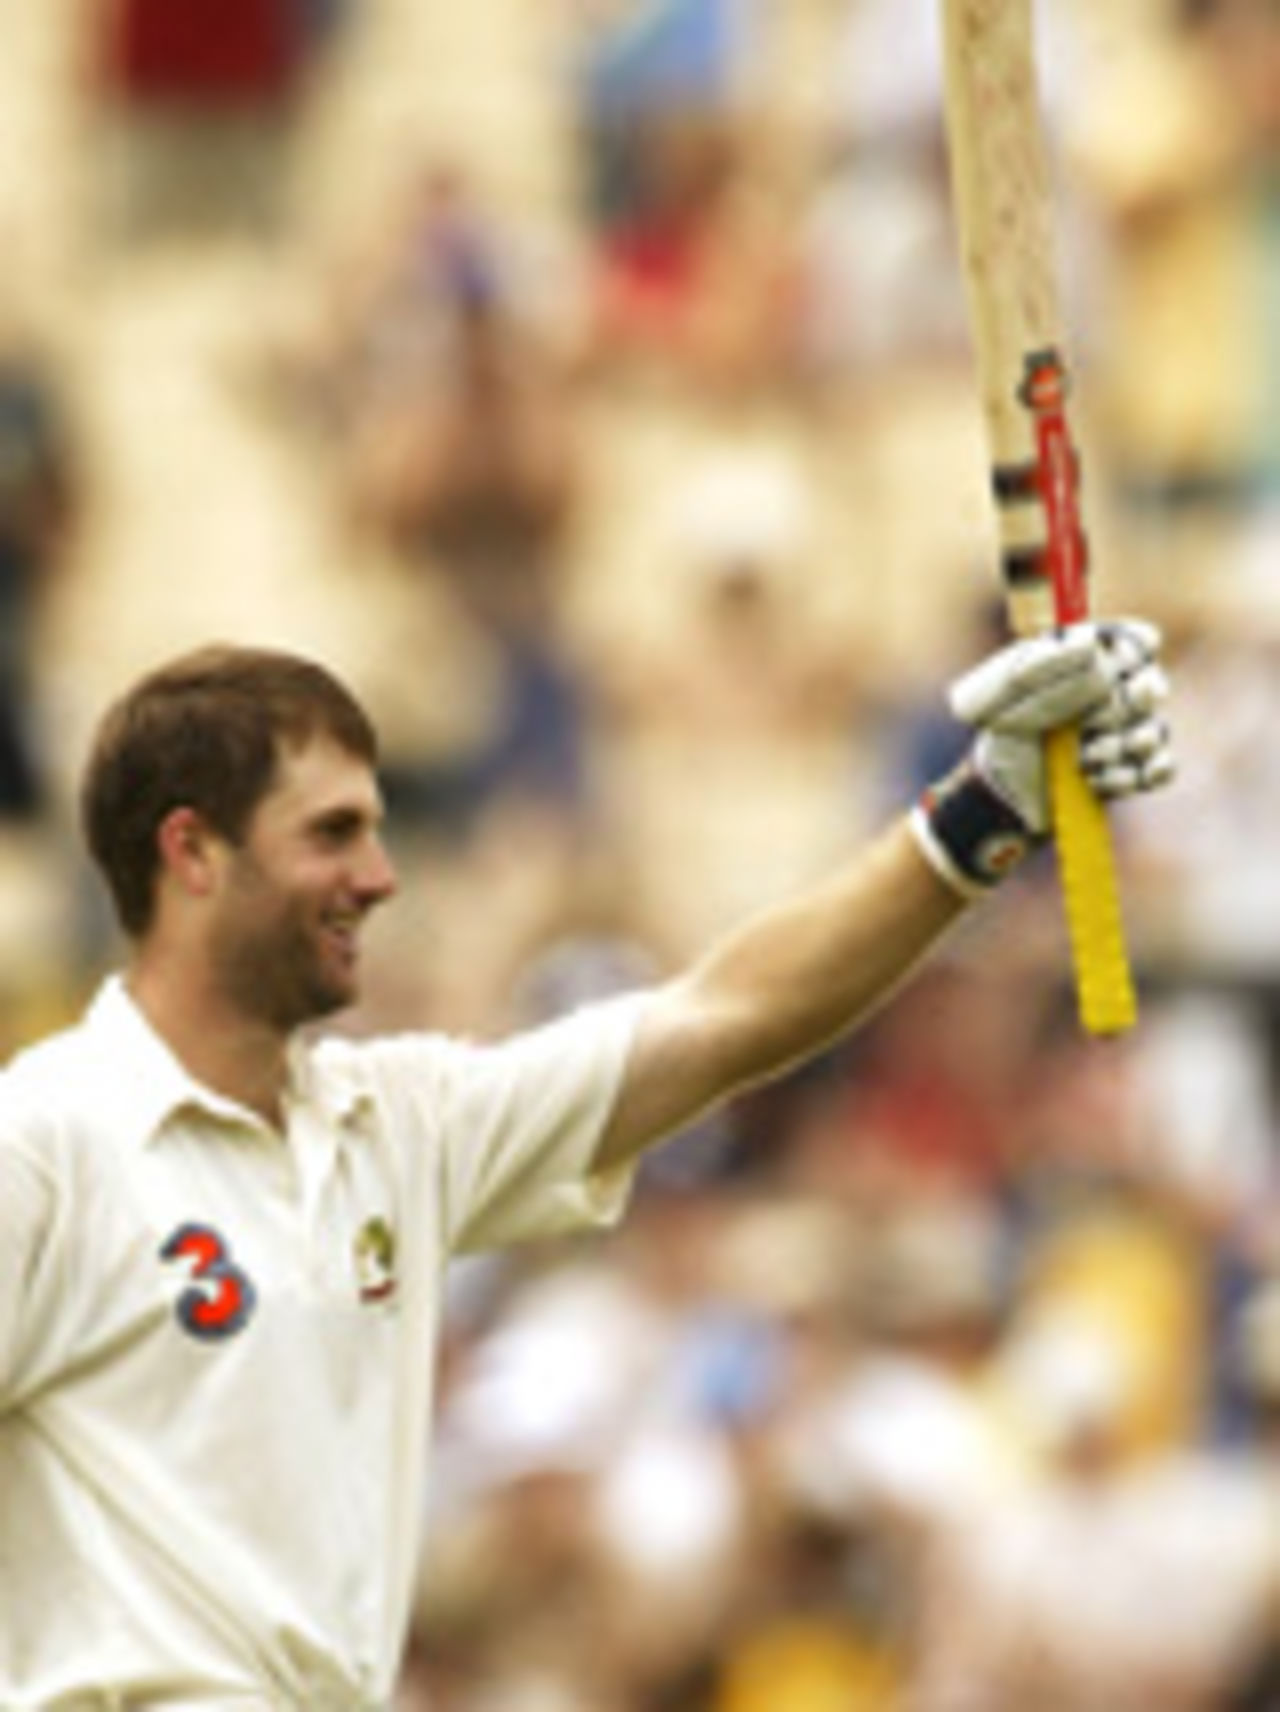 Simon Katich raises his bat after a hundred, Australia v India, 4th Test, Sydney, 4th day, January 5, 2004